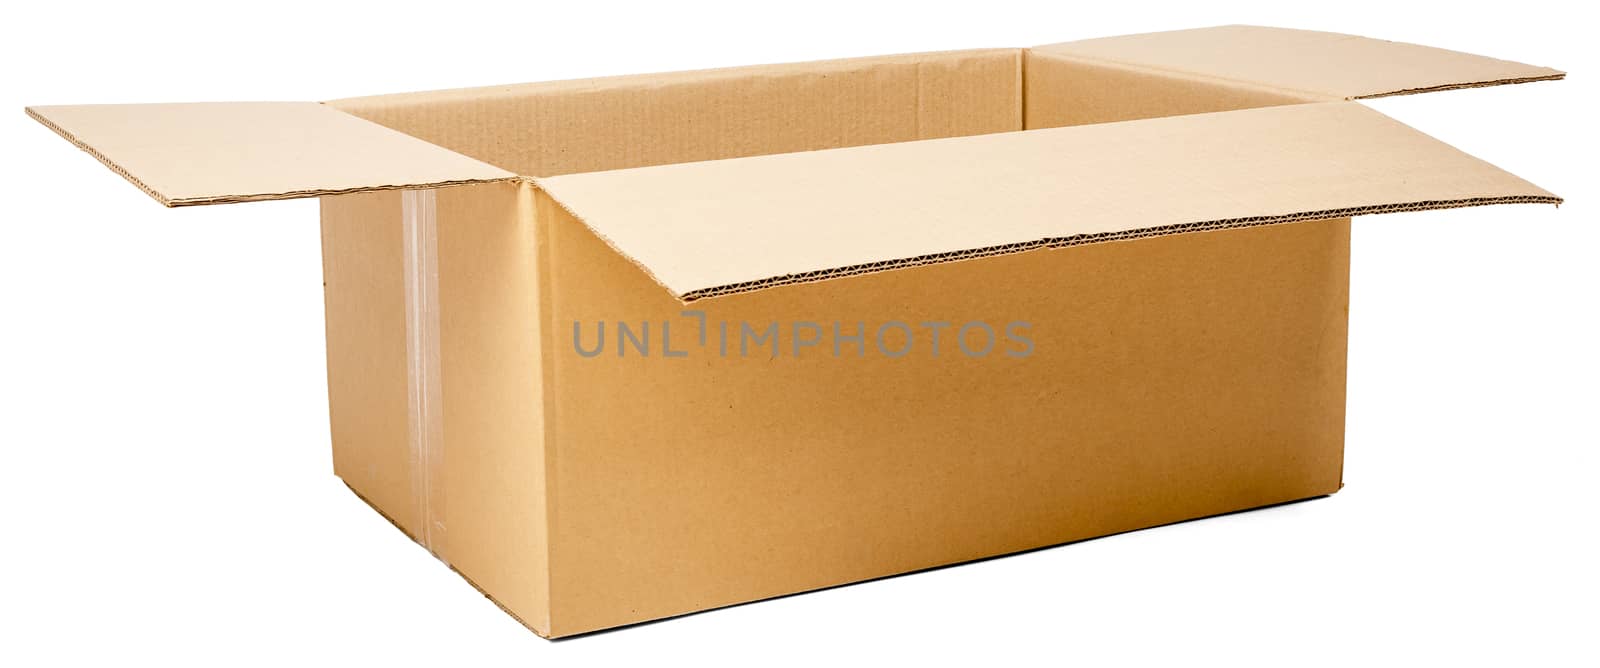 Opened cardboard box by cherezoff